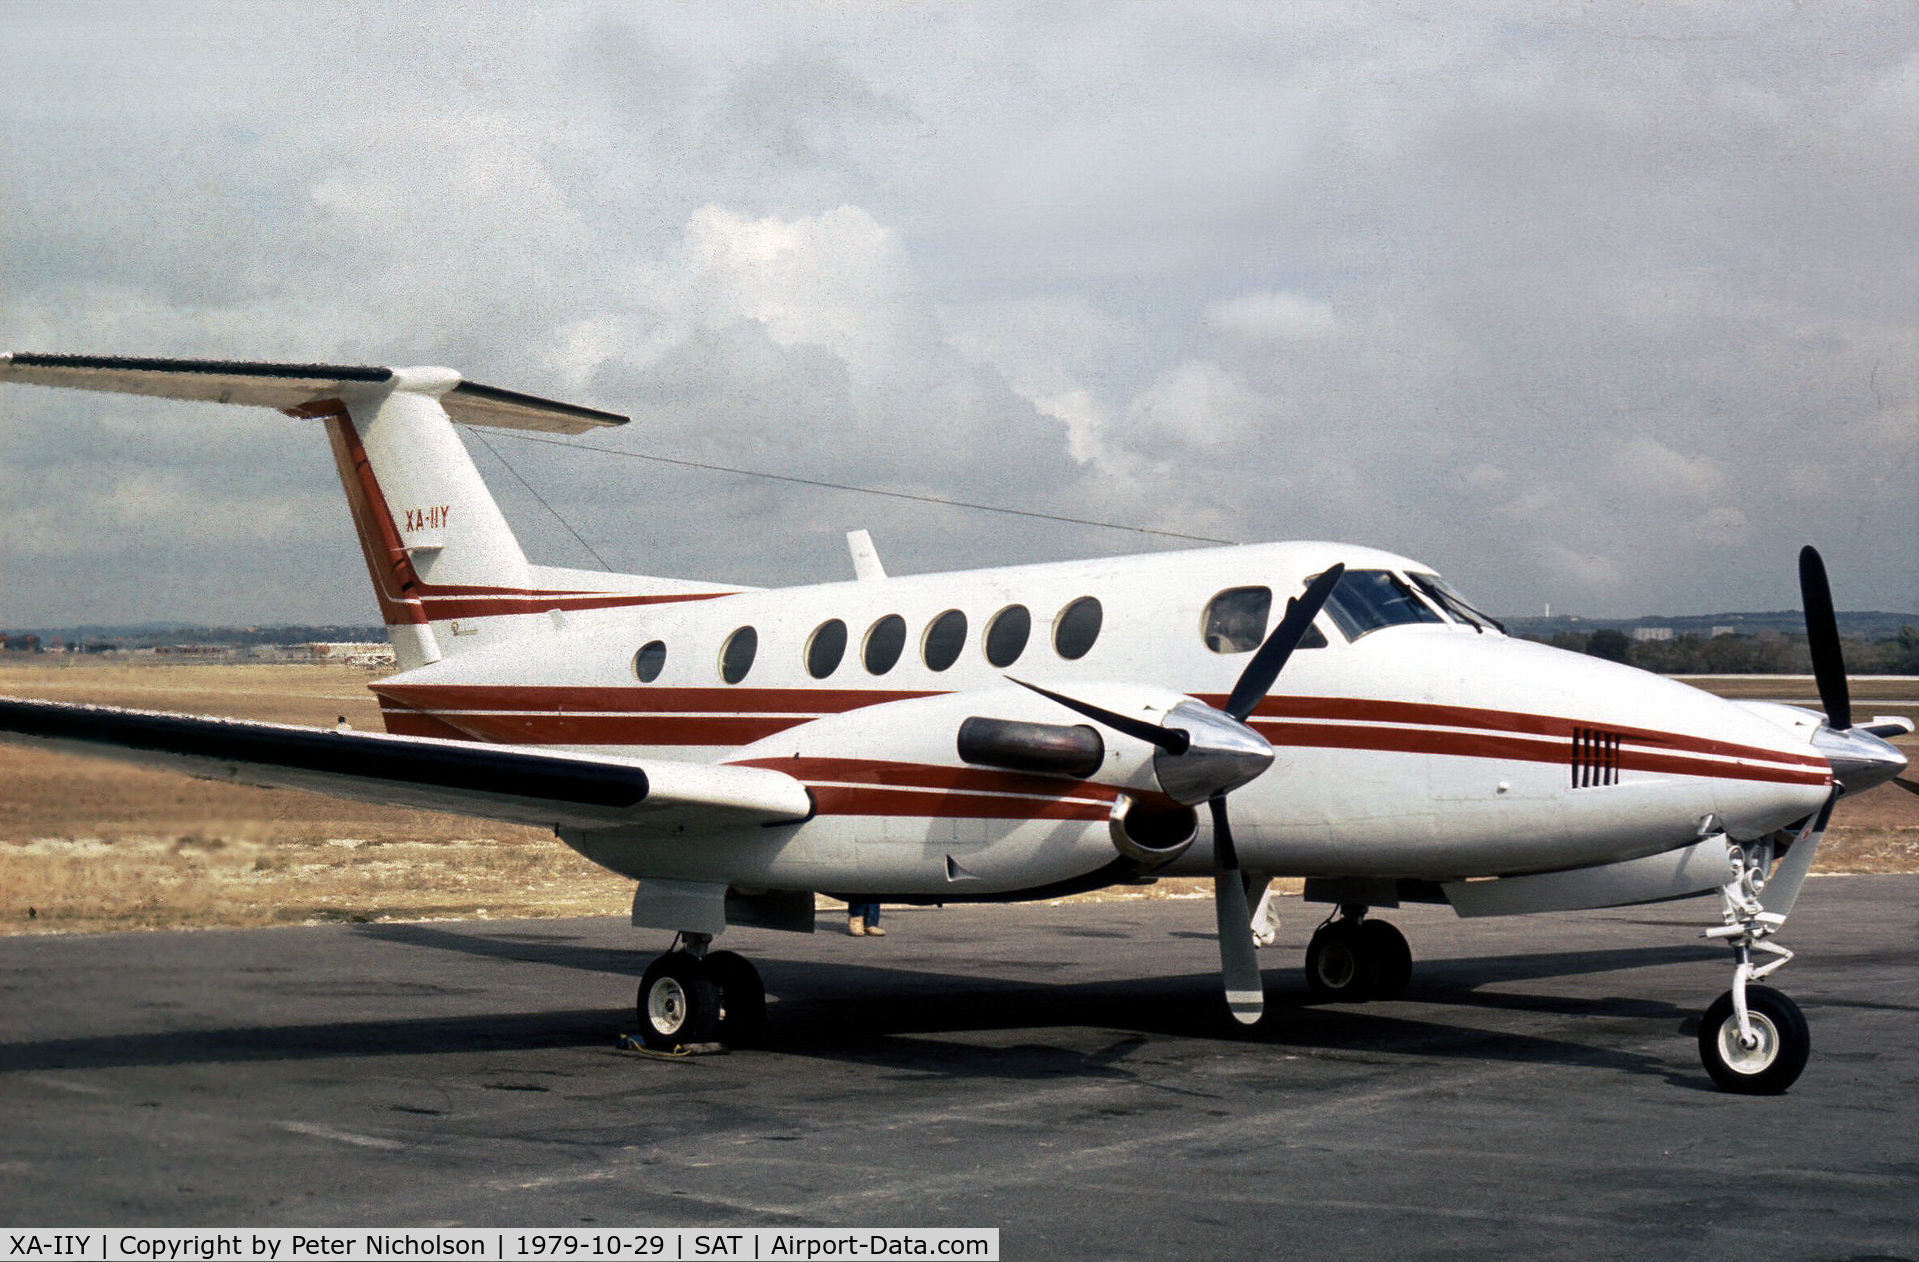 XA-IIY, 1978 Beech 200 C/N BB-395, Beech Super King Air 200 as seen at San Antonio in October 1979.